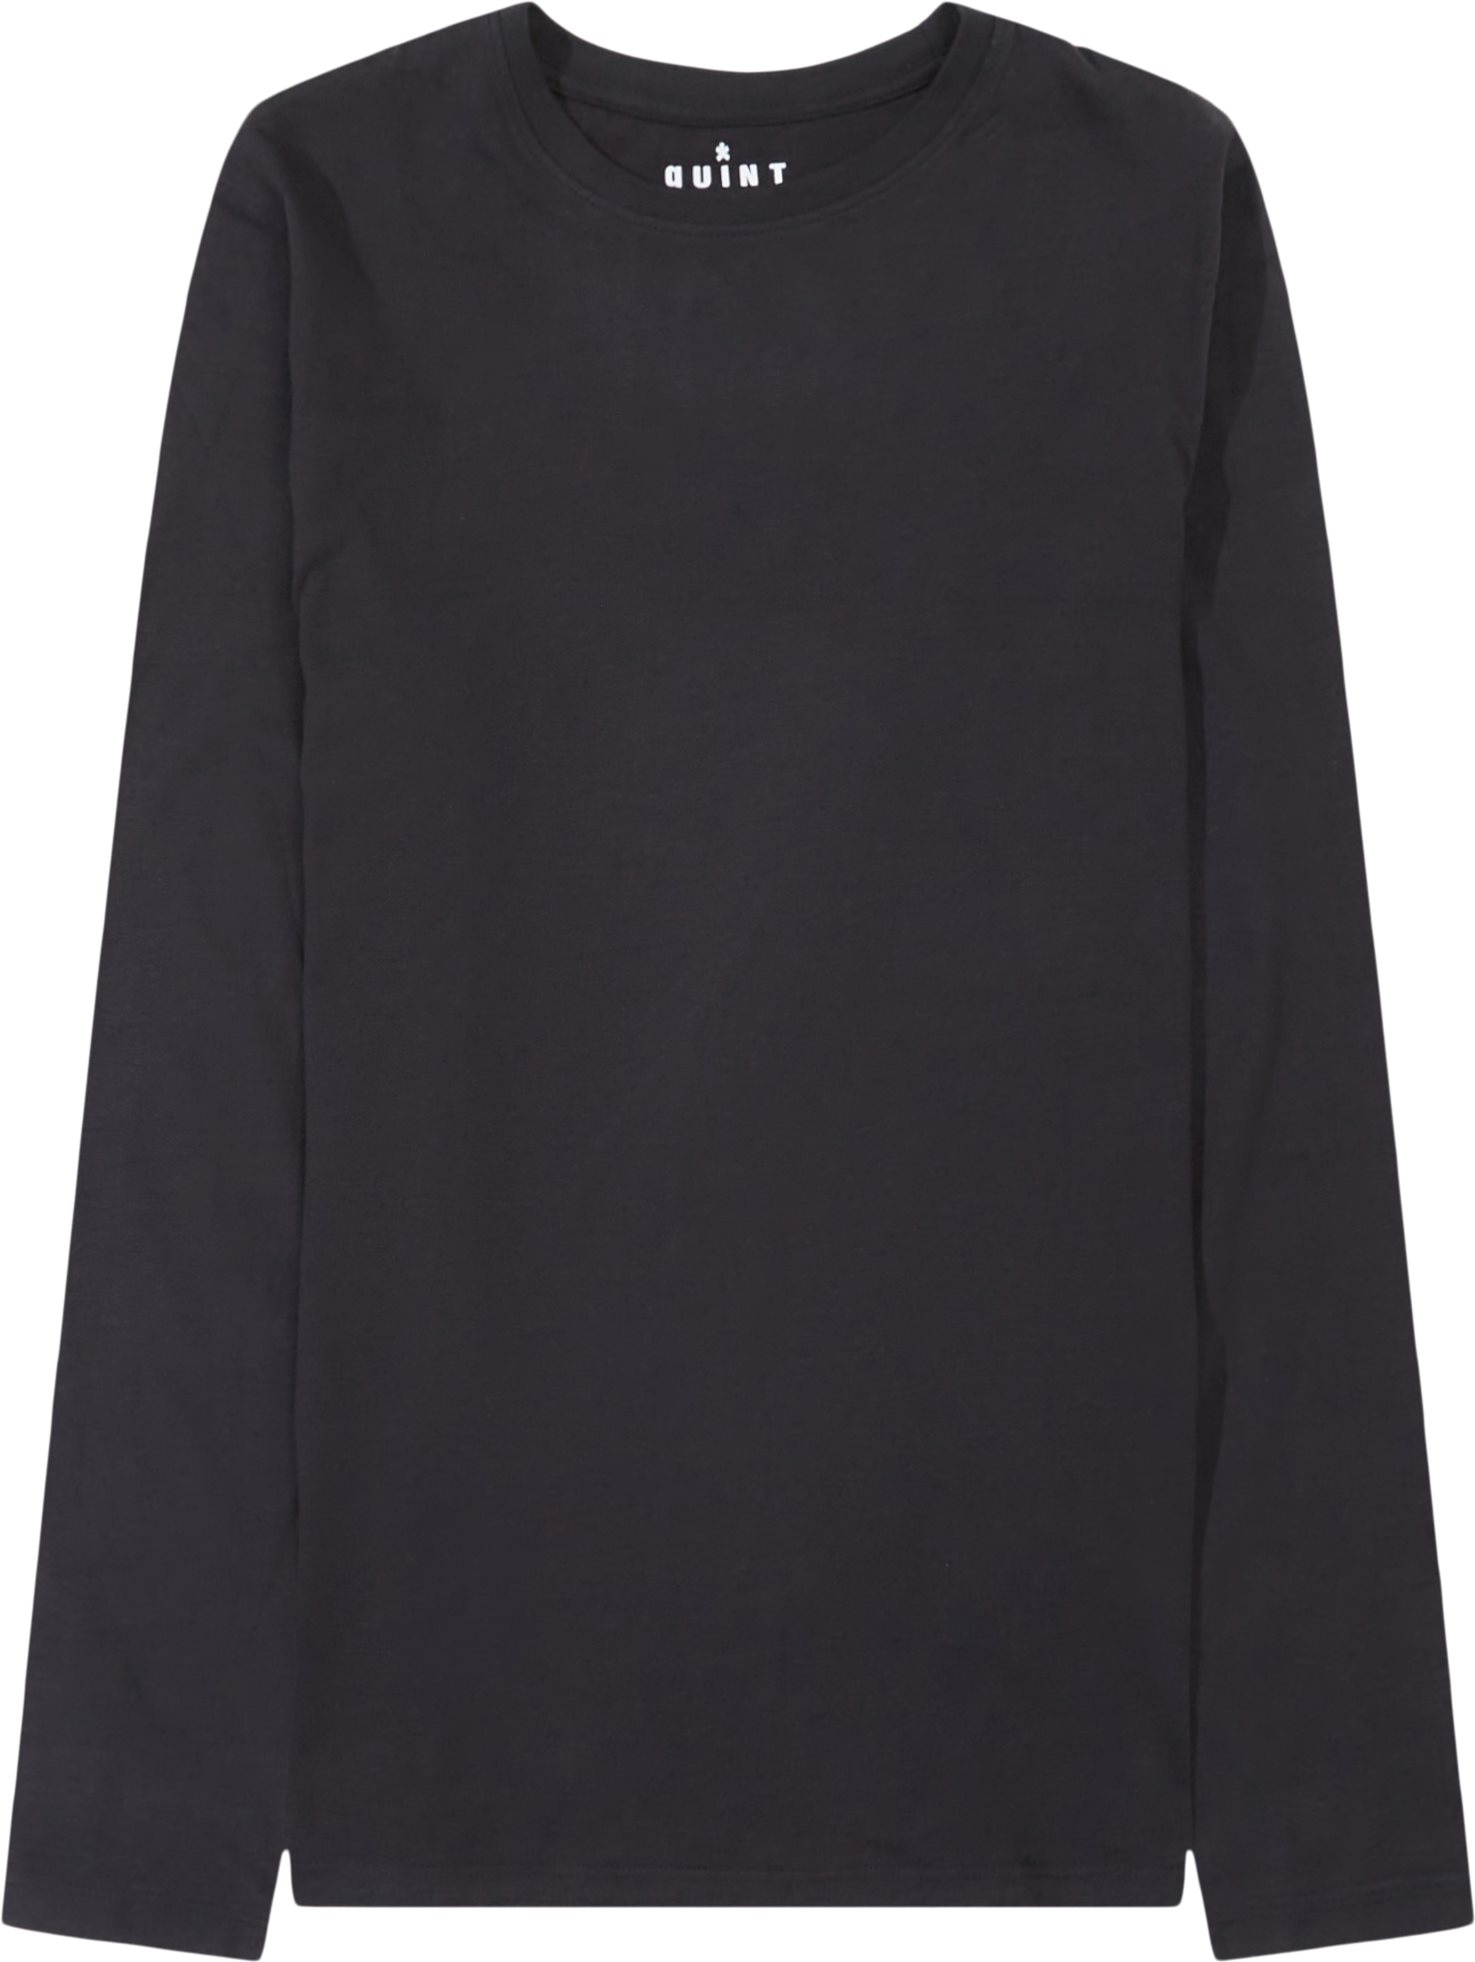 Ray Long Sleeve Tee - T-shirts - Regular fit - Black